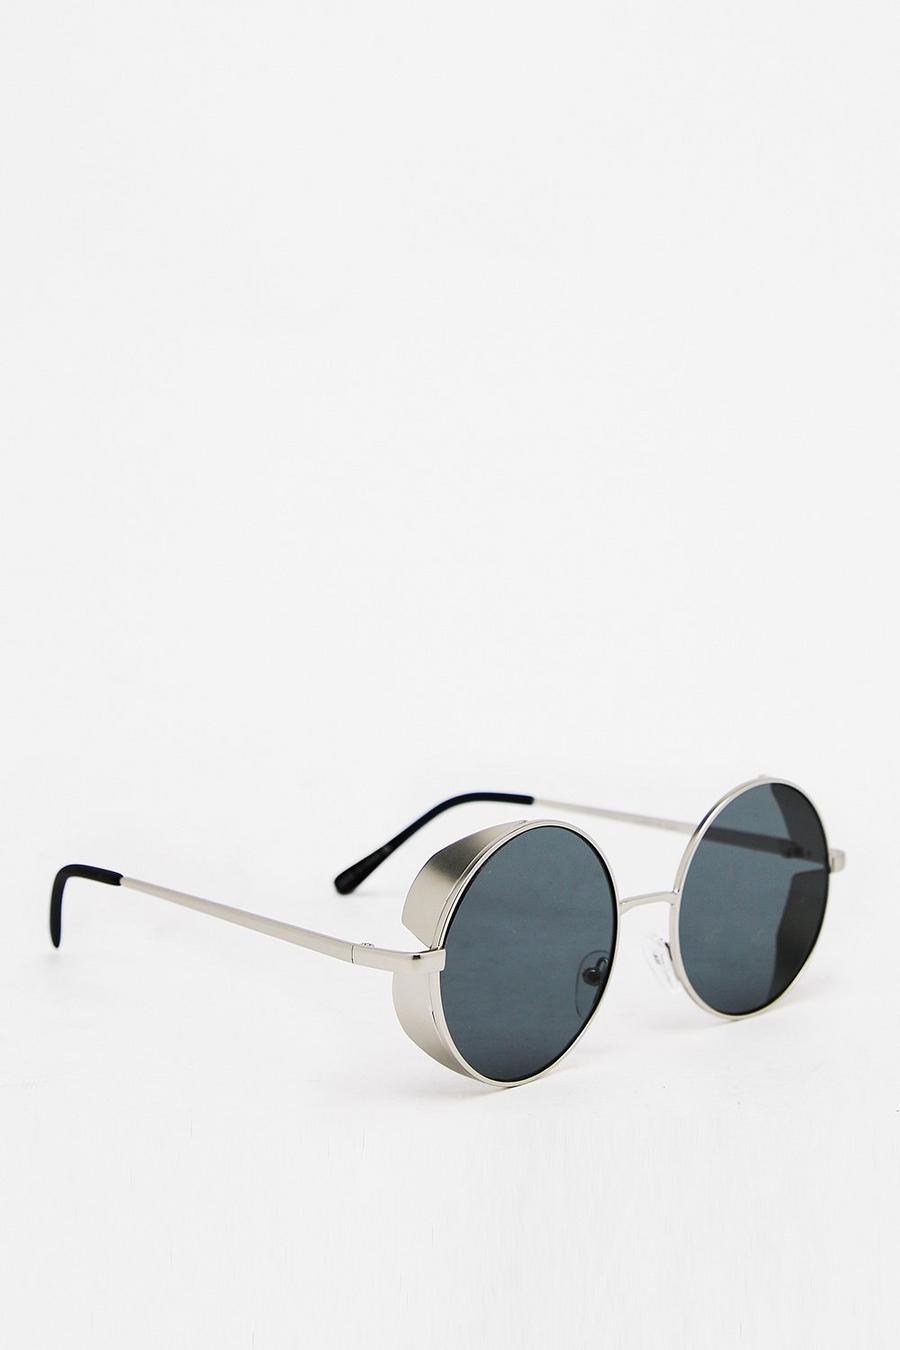 Mens Sunglasses BoohooMAN Sunglasses for Men Blue BoohooMAN Metal Half Frame Sunglasses in Silver 